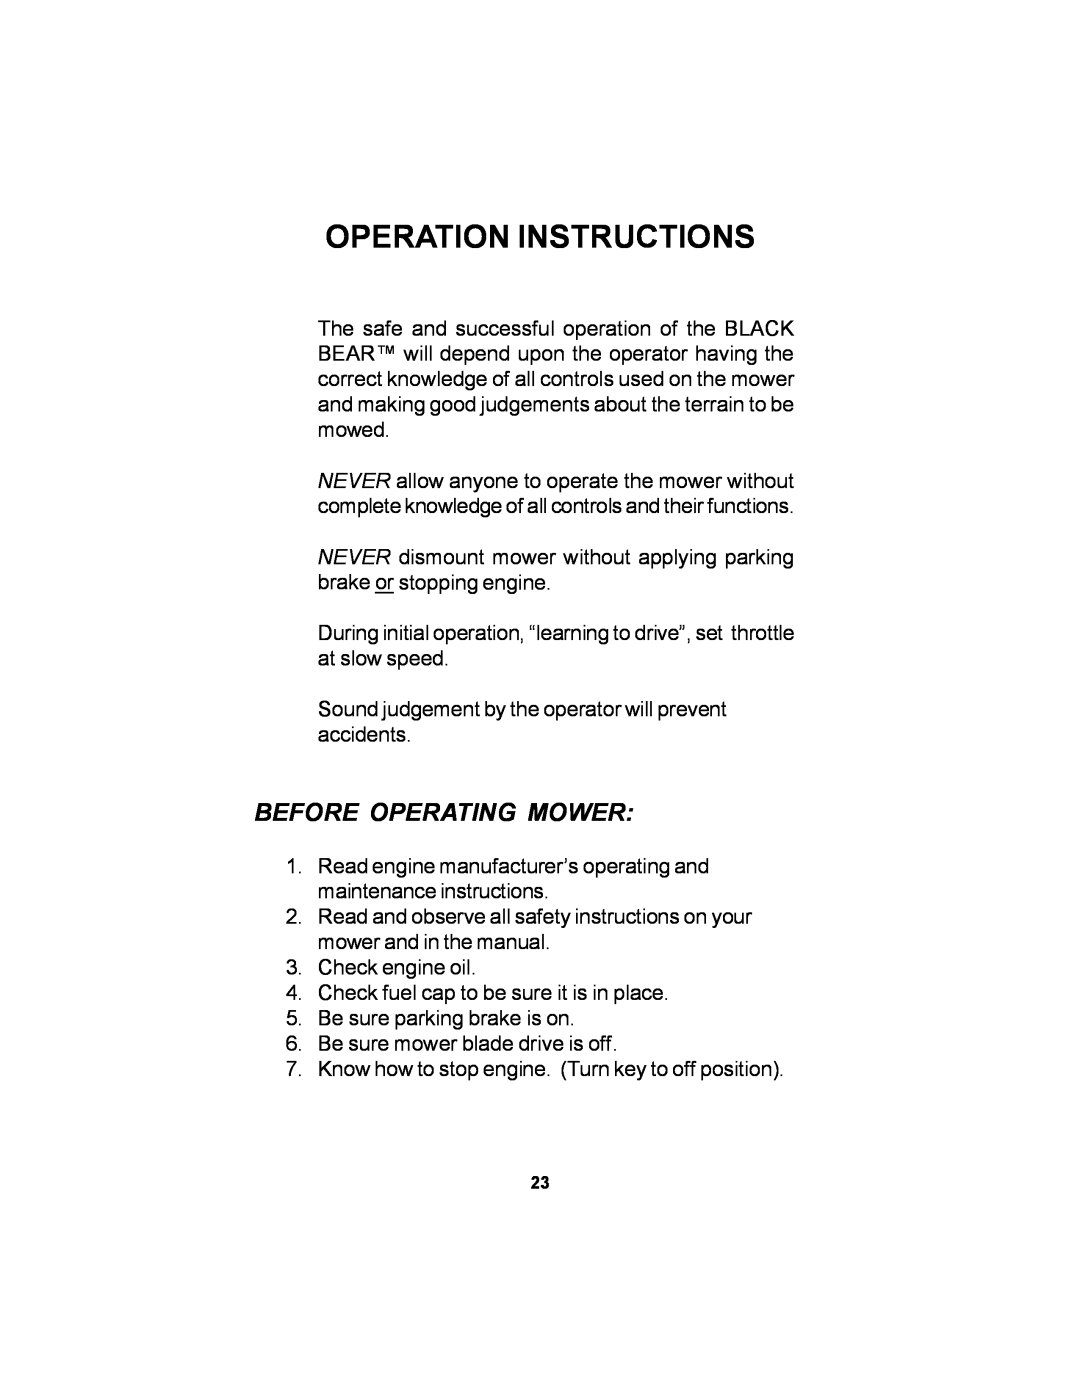 Dixon 11249-106 manual Operation Instructions, Before Operating Mower 